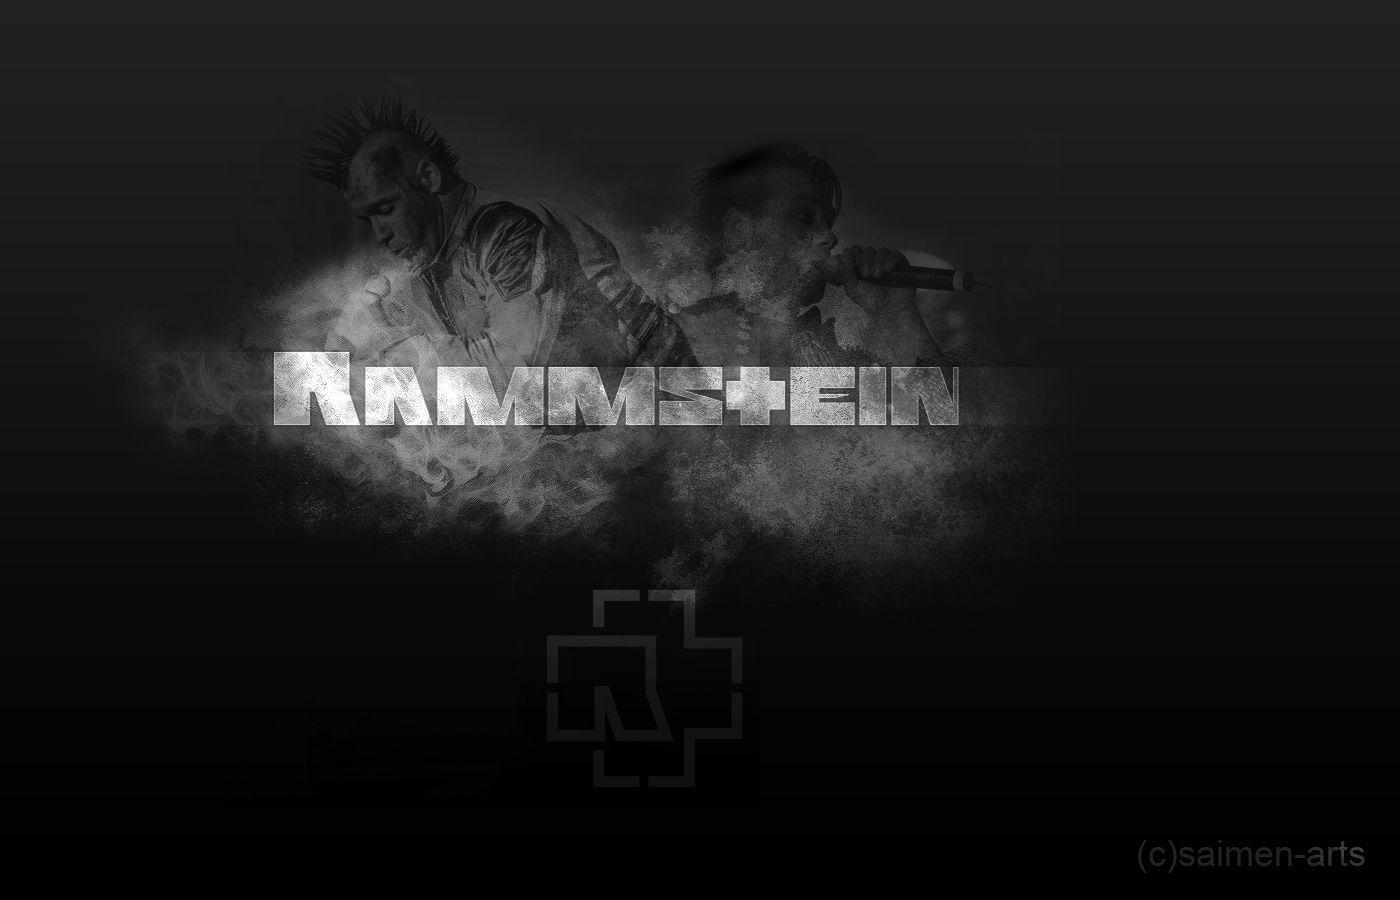 Resultado de imagen para rammstein logo wallpaper